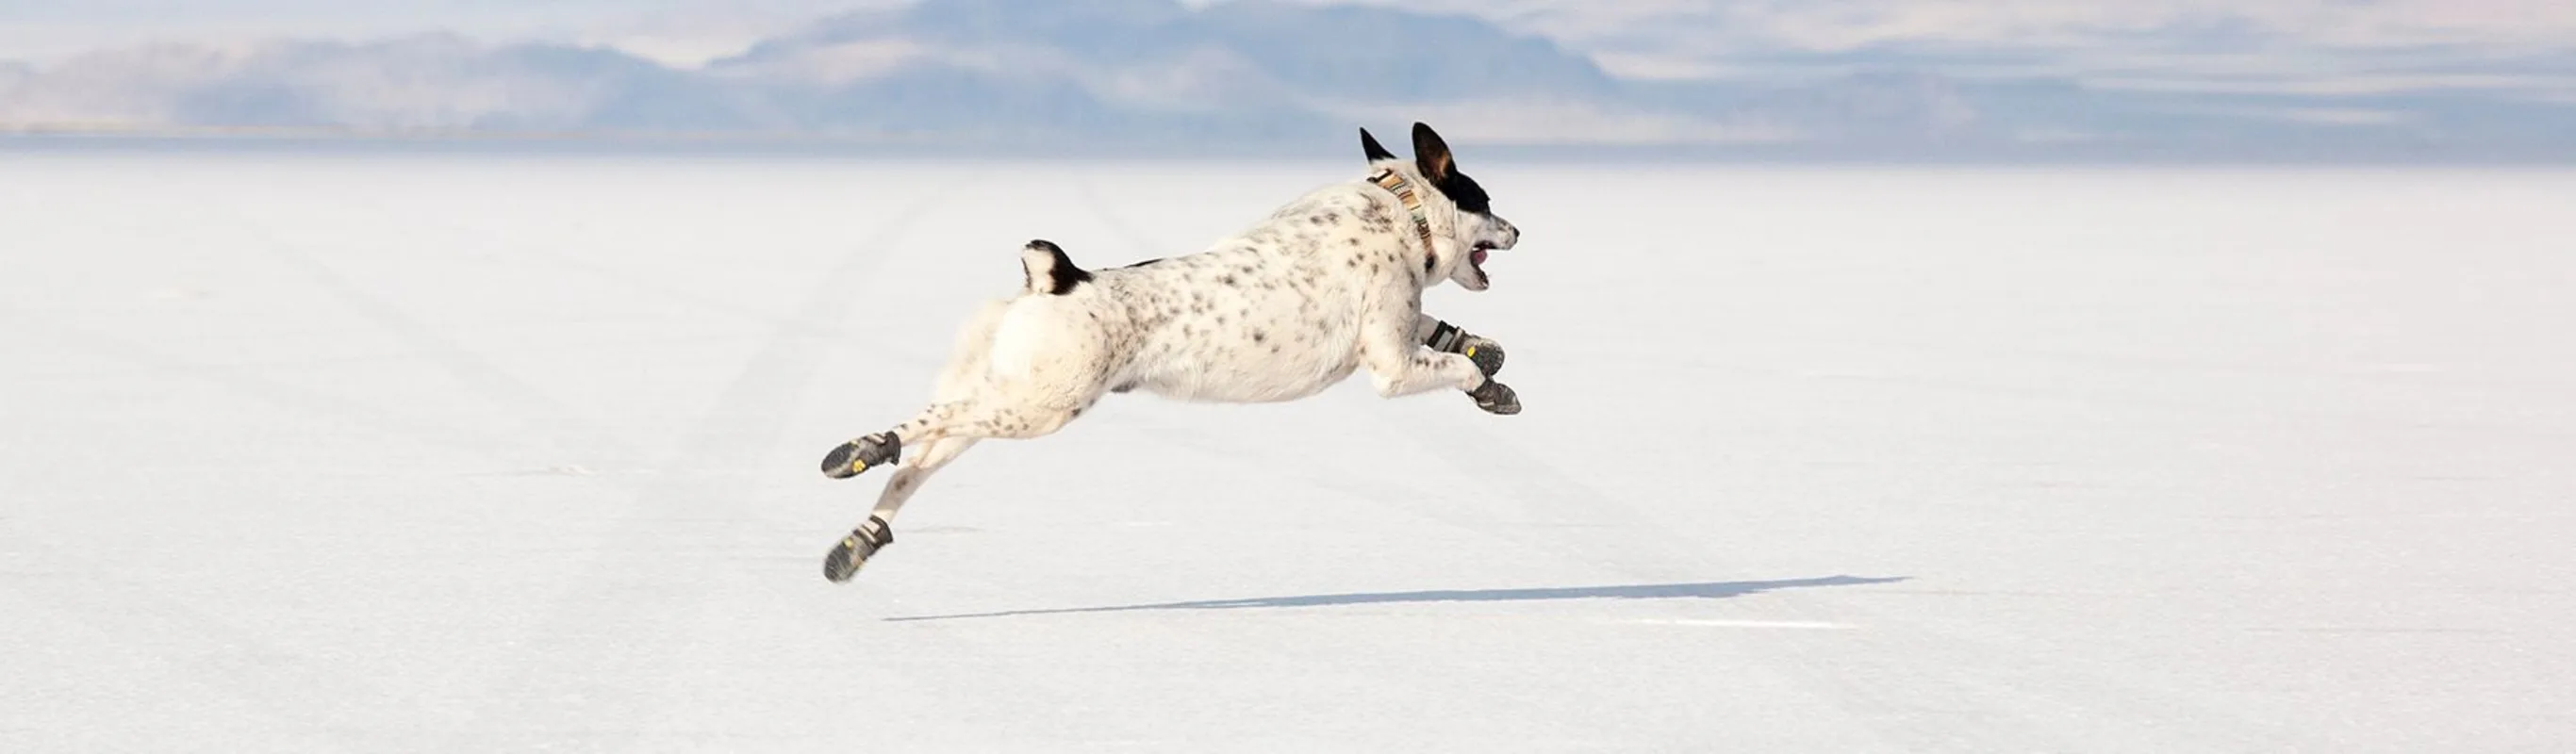 Dog sprinting